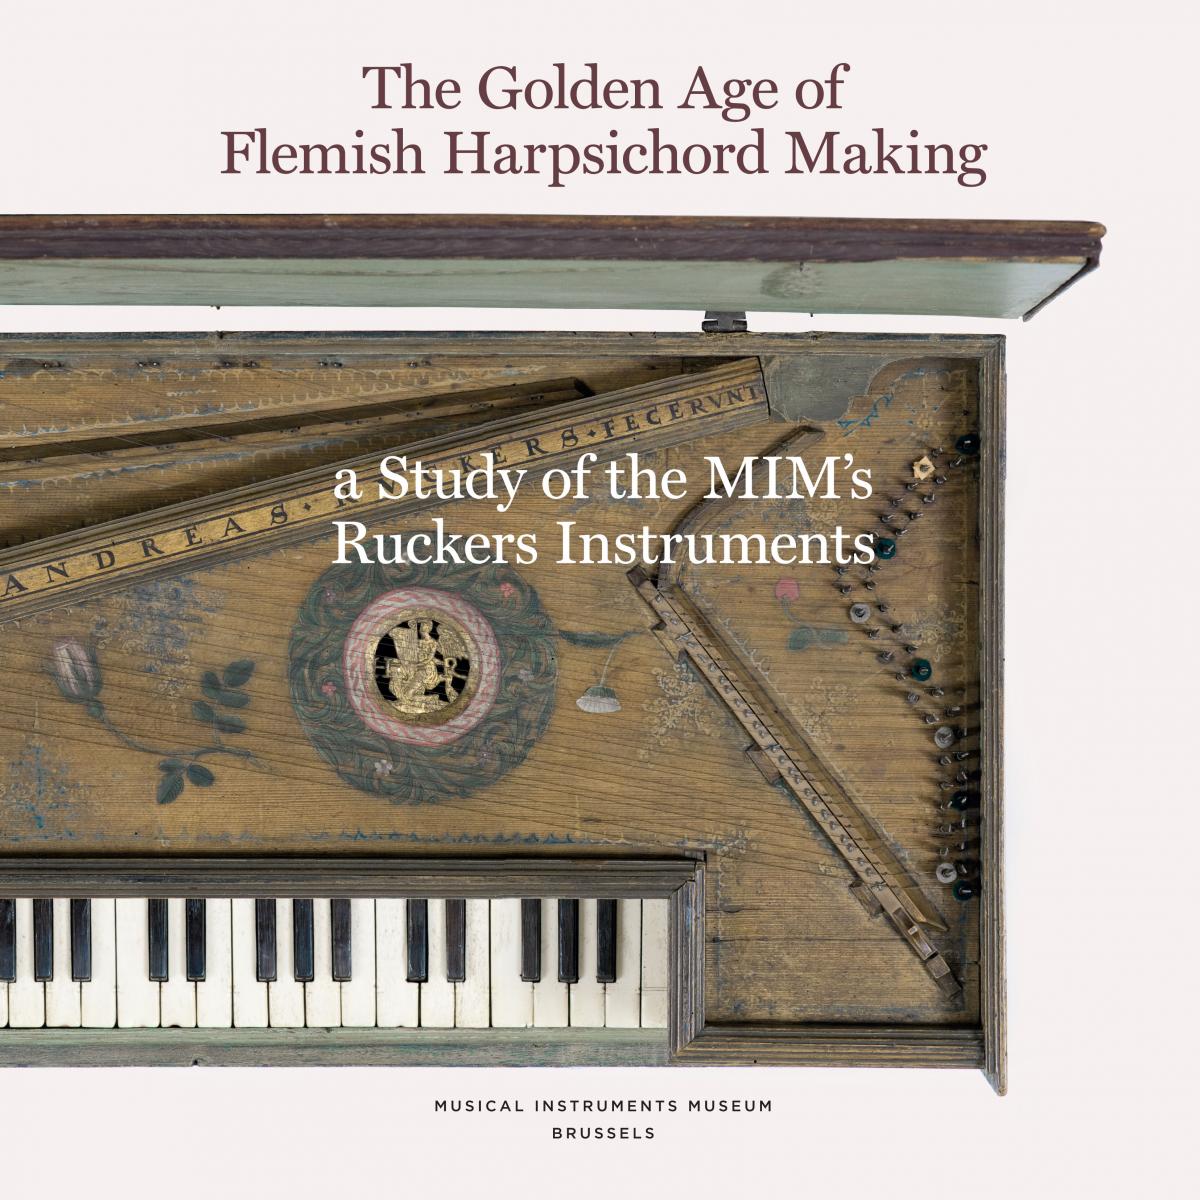 The Golden Age of Flemish Harpsichord Making